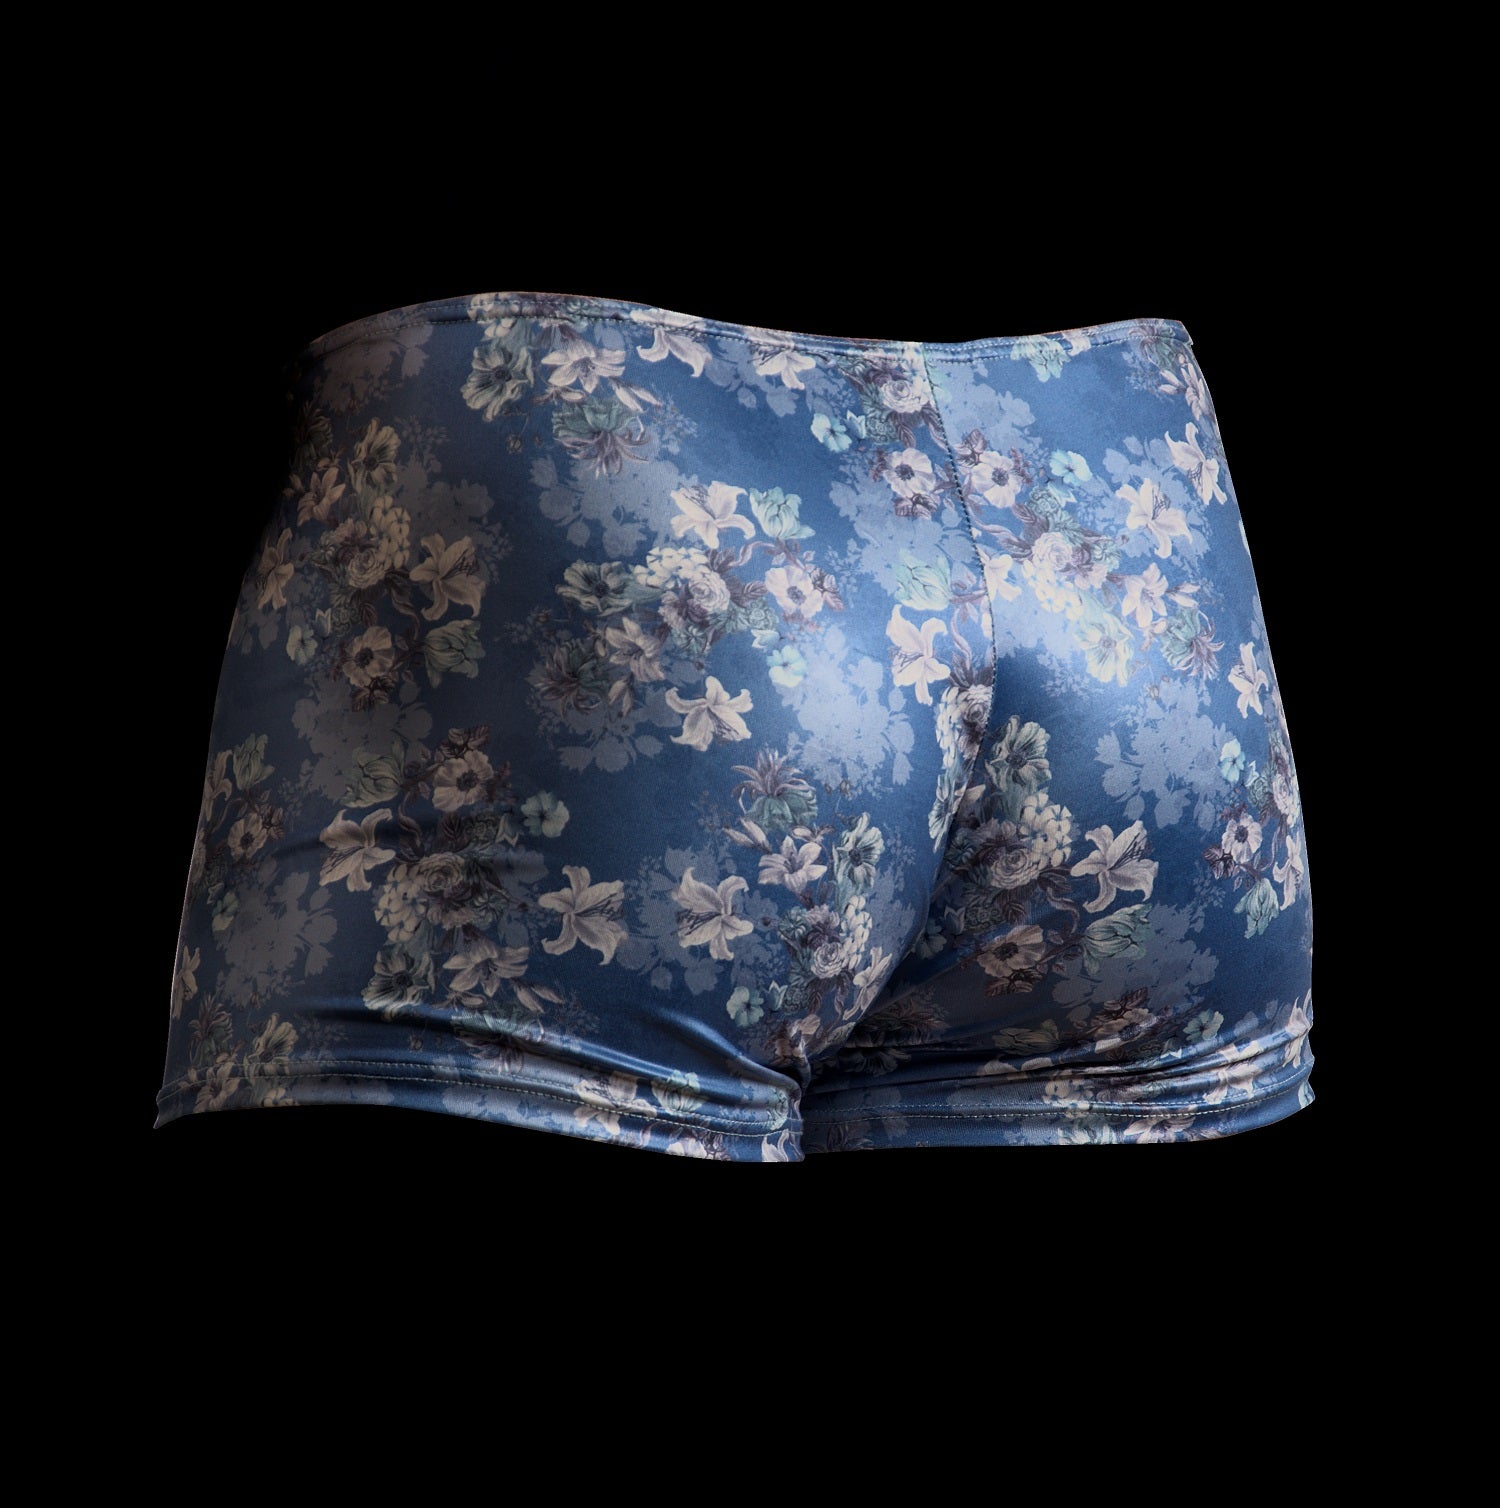 Best Blue Trunks For Travel  TBô Underwear #travel 